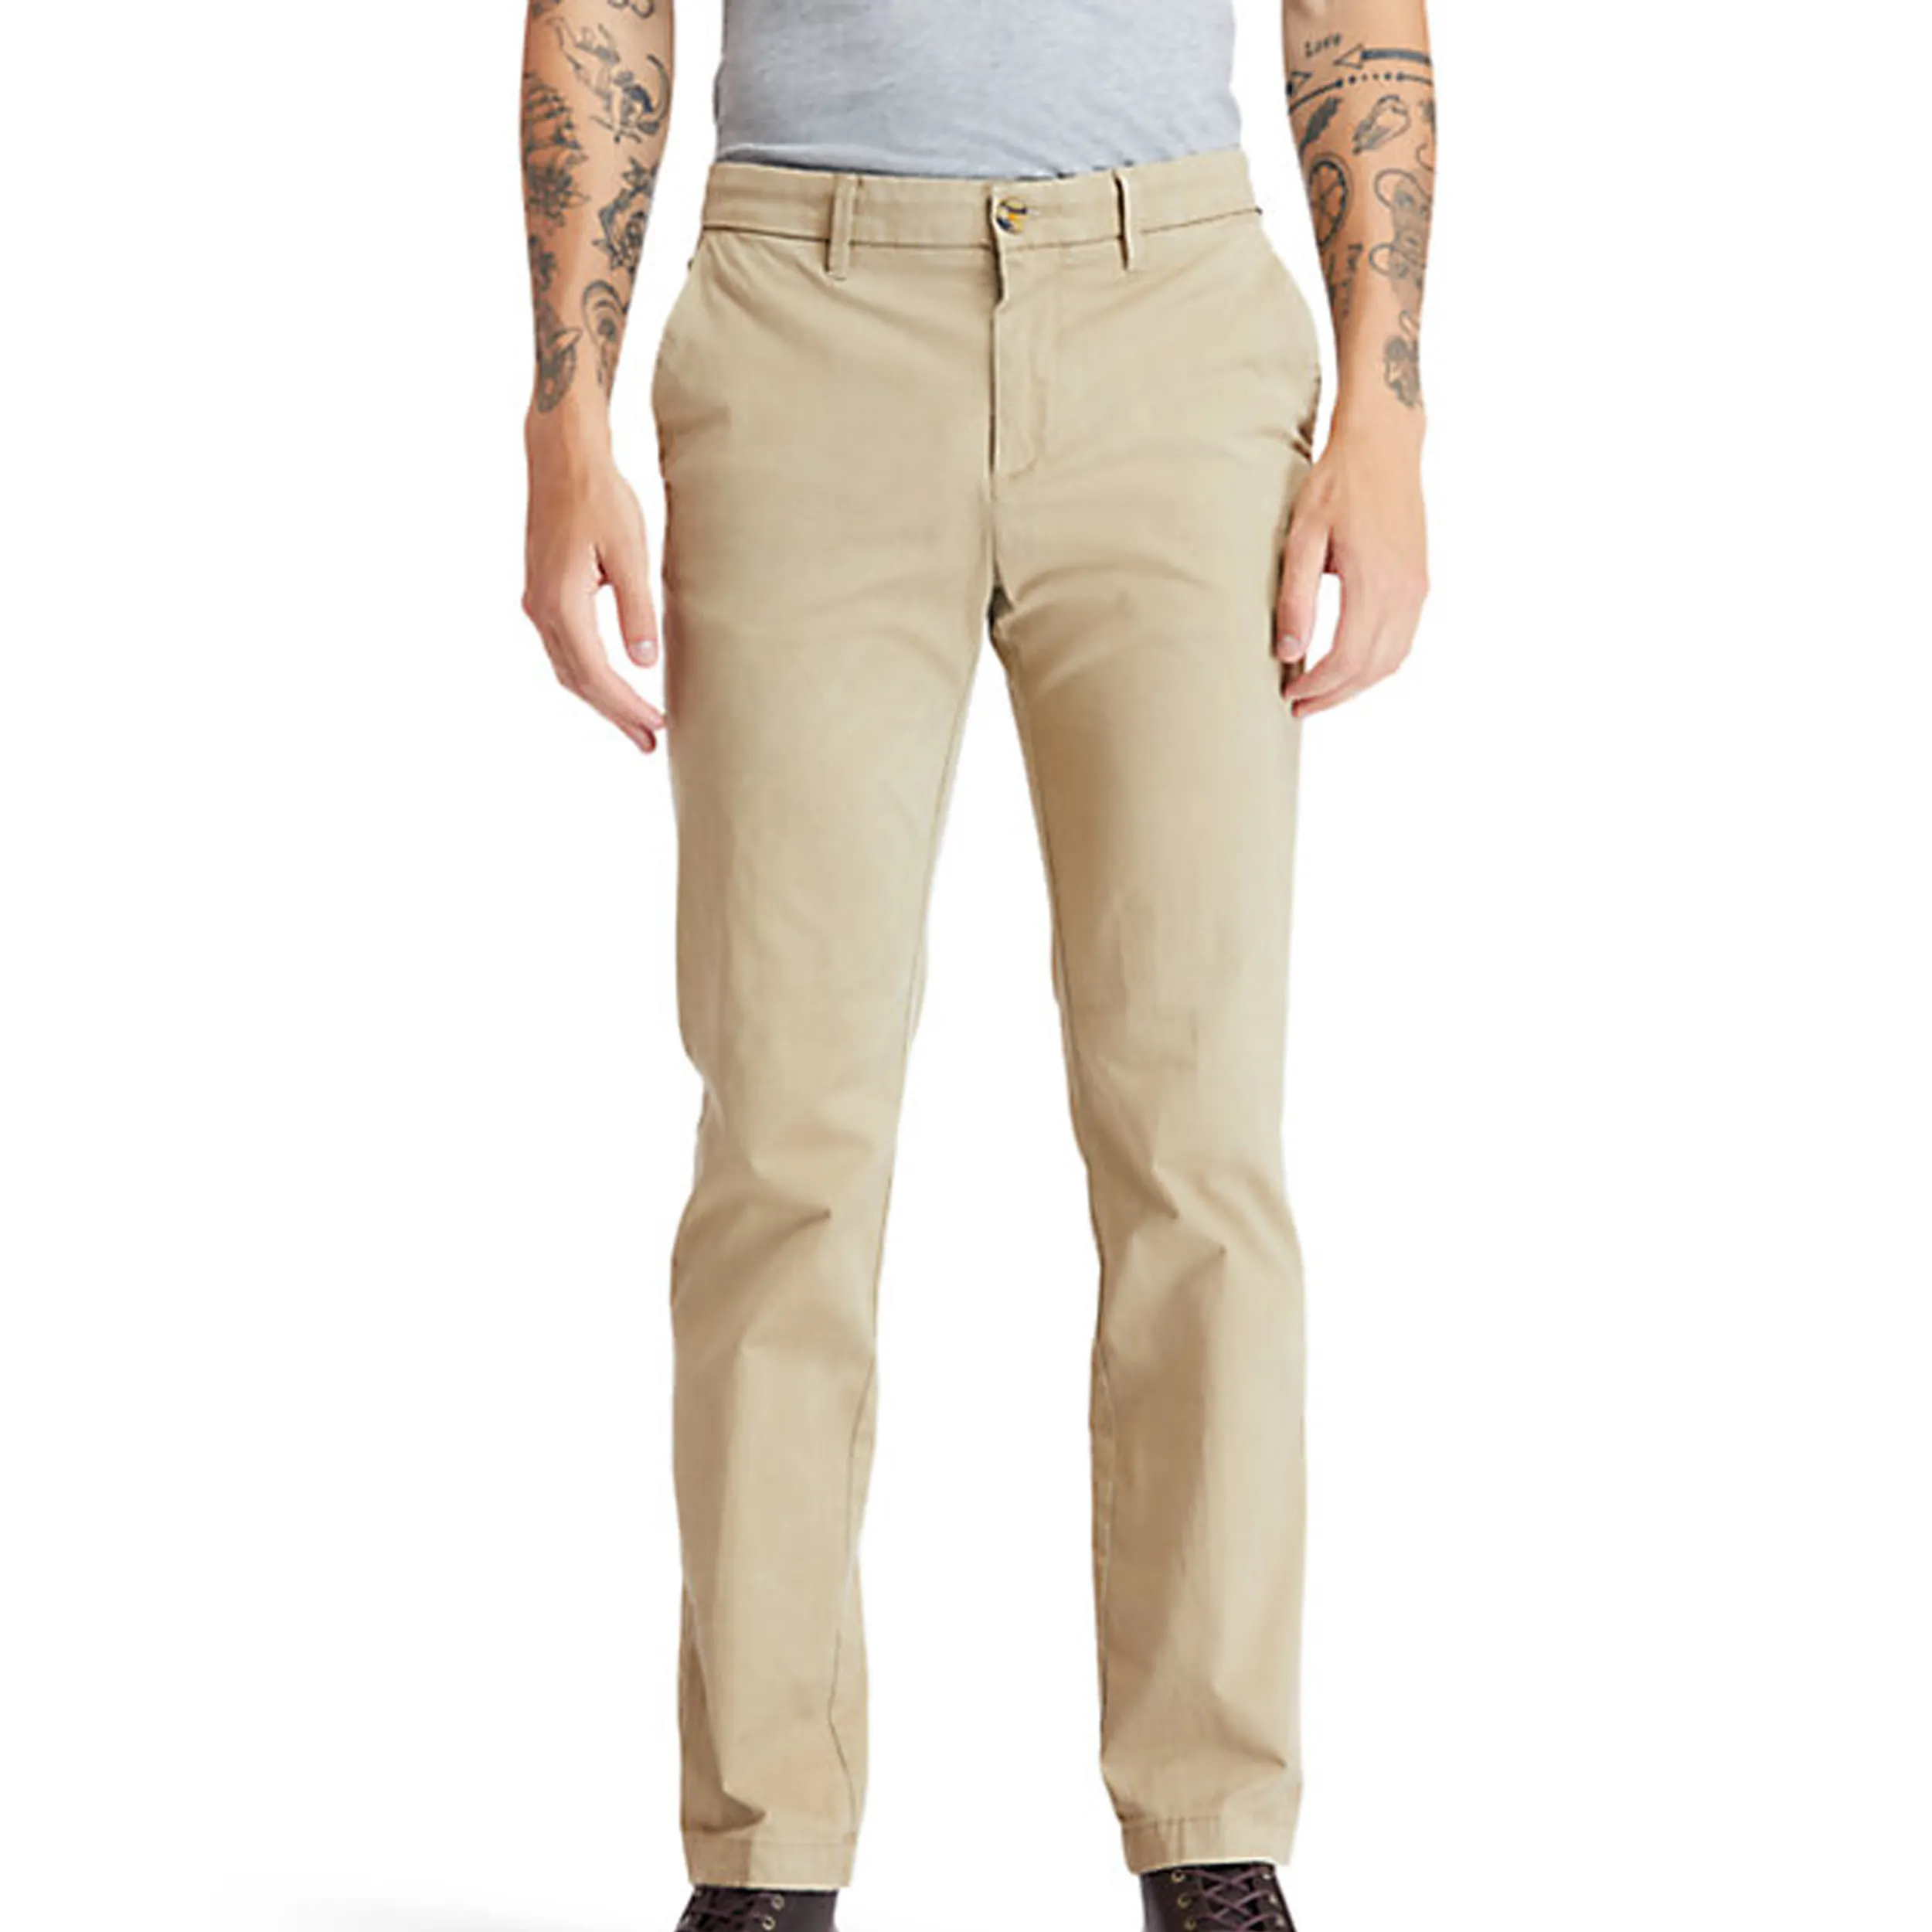 OEM Fashion High Quality Latest Style Men Chino Pants Fashionable Pants 100% Twill Cotton Chino Pants